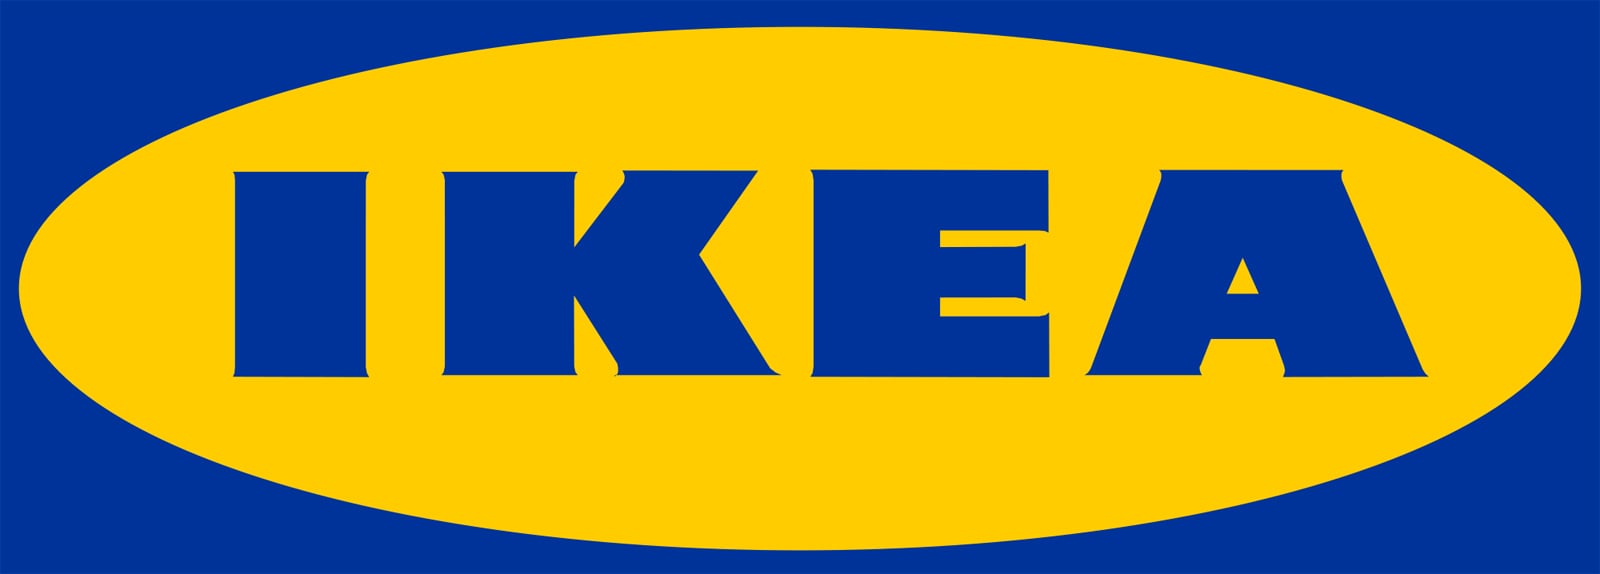 Ikea symbol